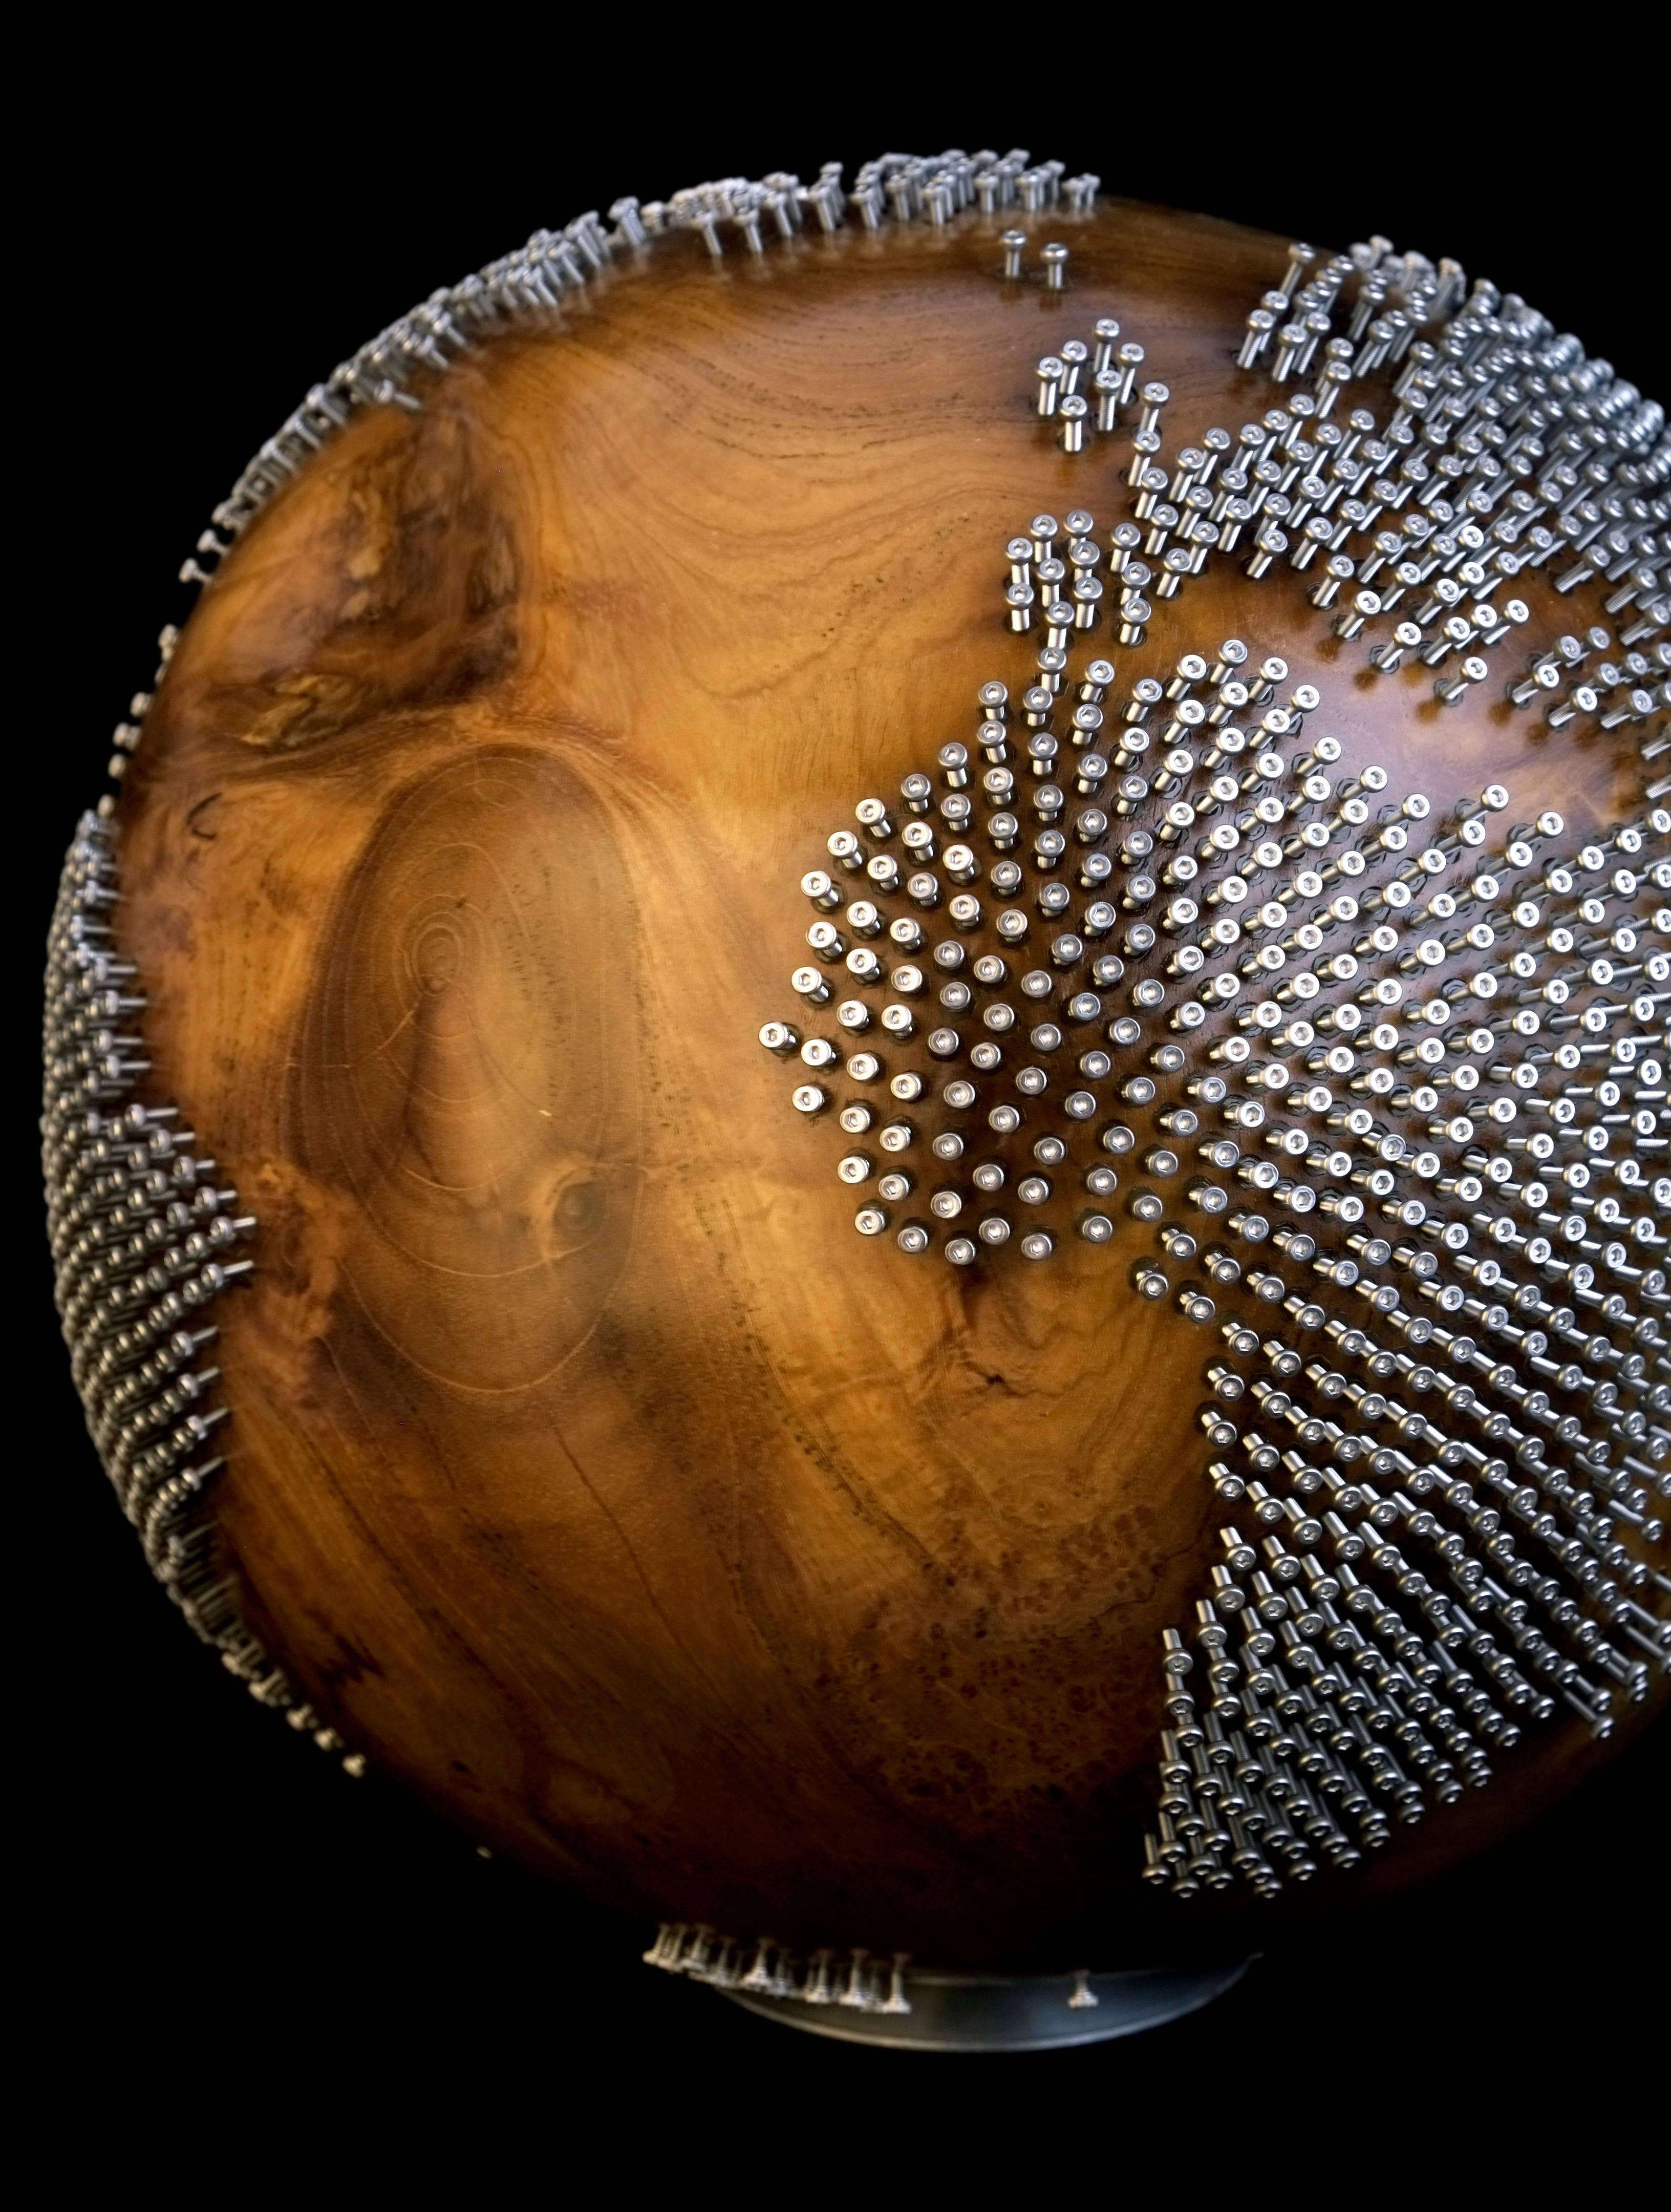 Appliqué 2147 Stainless Bolts for a Unique Wooden Globe, 30 cm